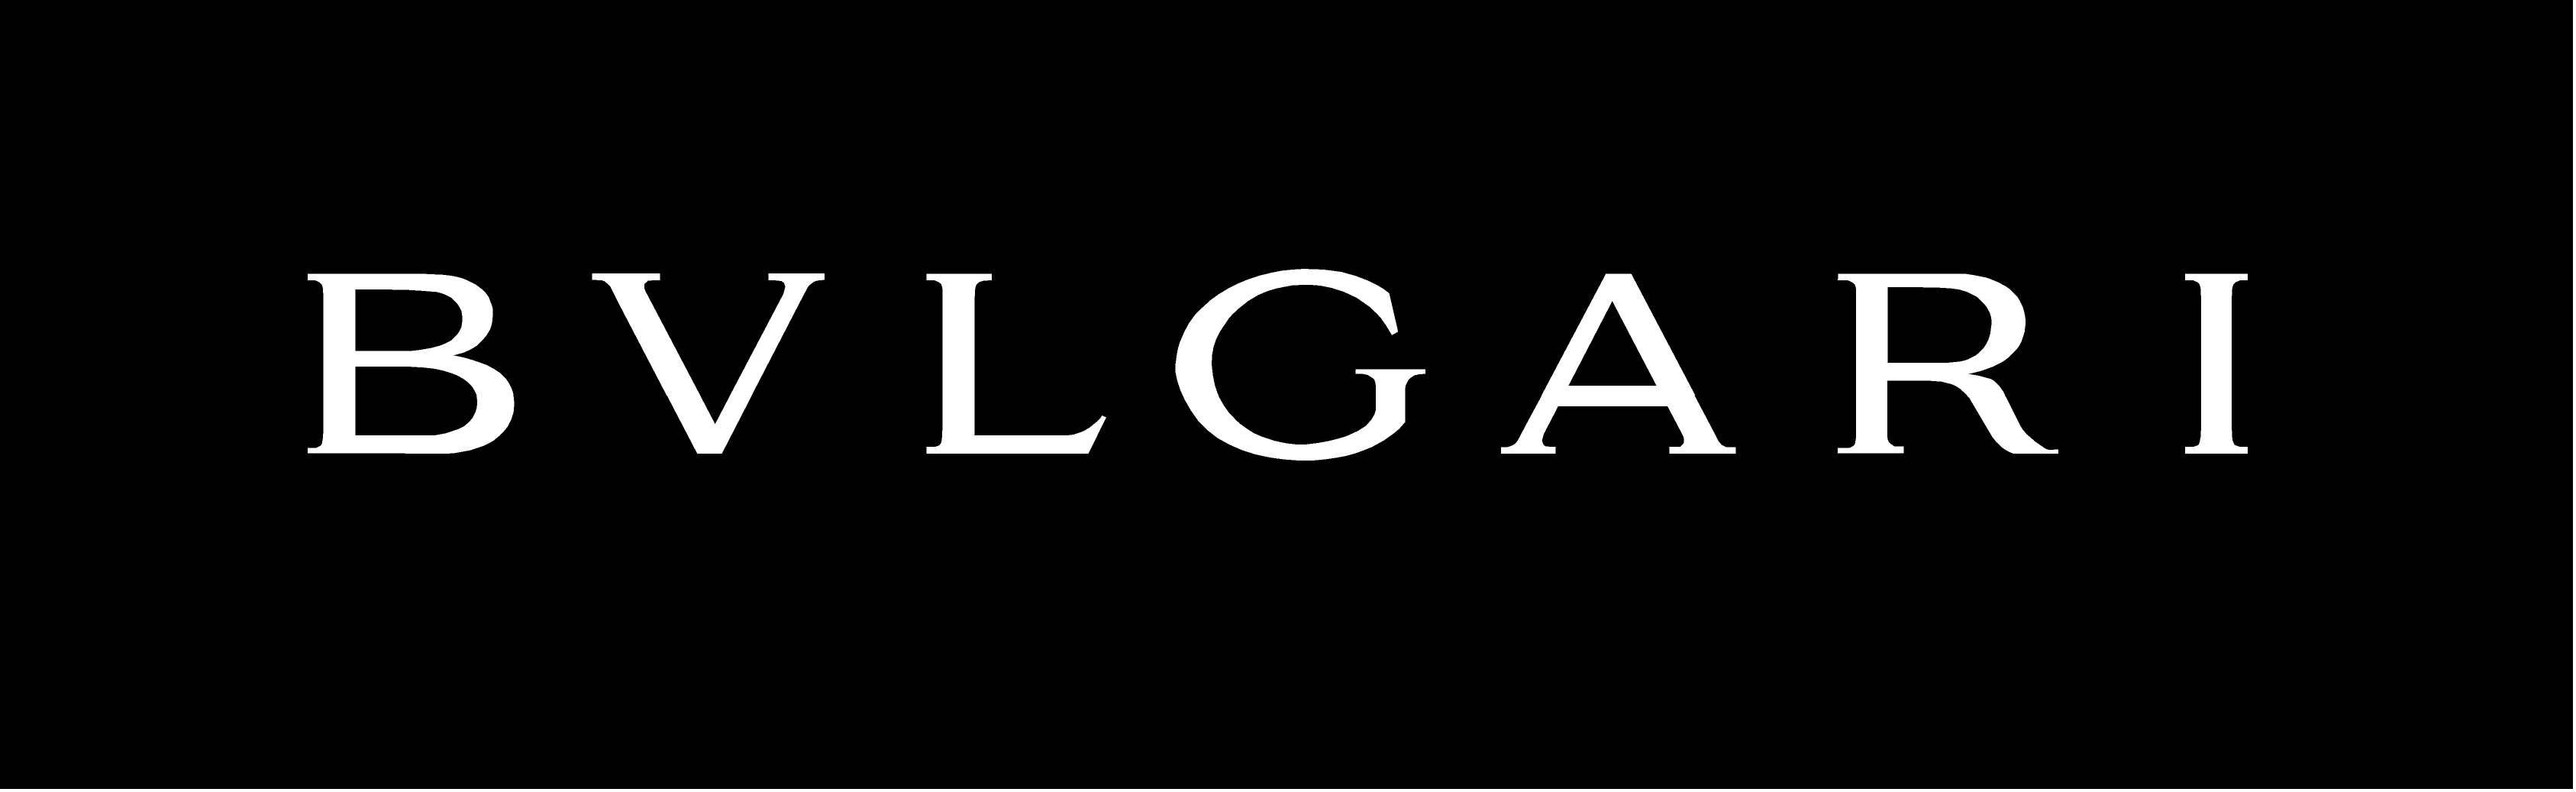 Bvlgari Perfume Logo - Bvlgari Collection | Pabango Co.